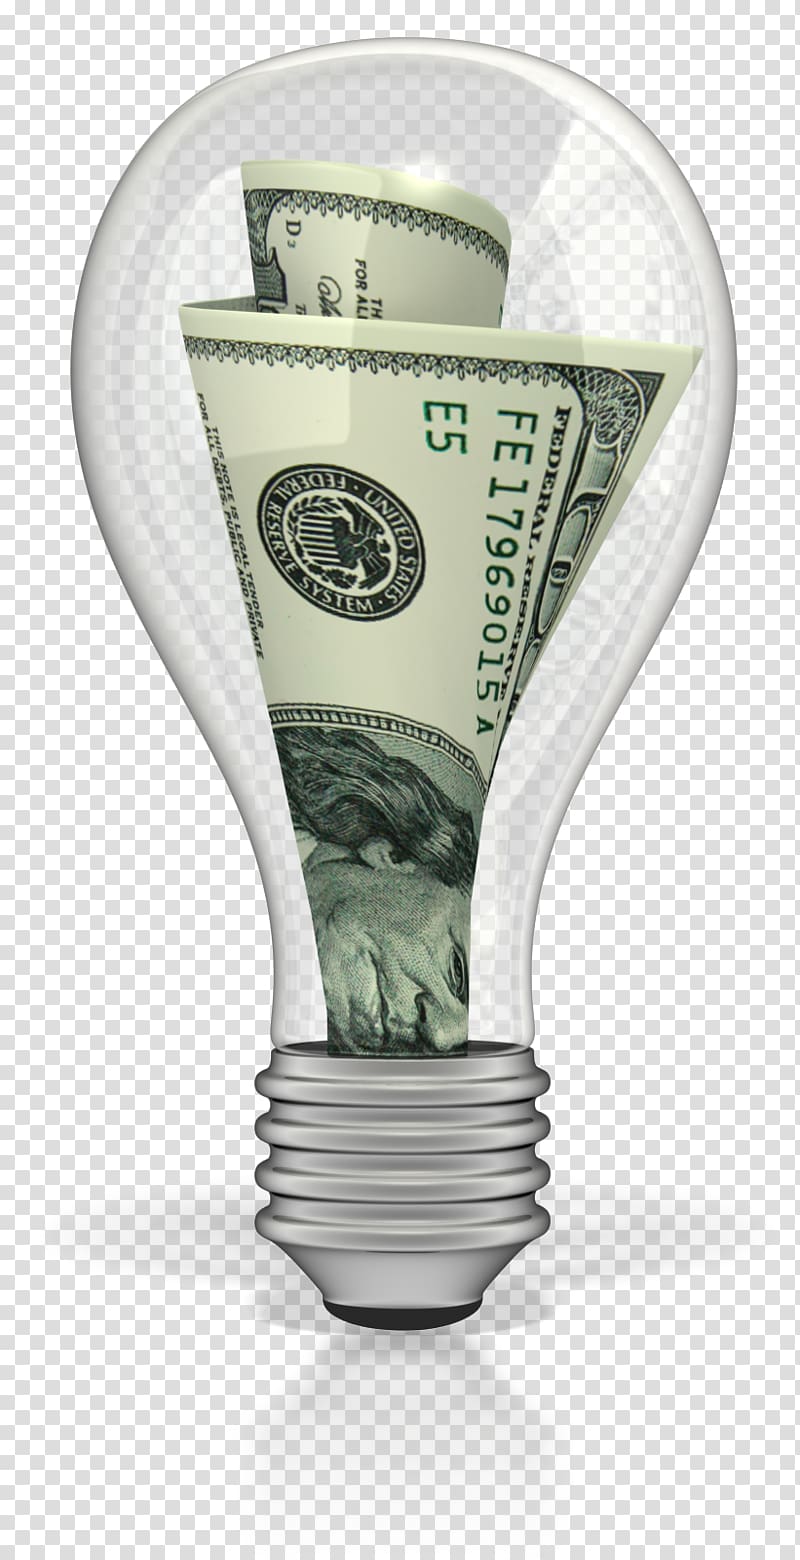 Incandescent light bulb Money Accounting Saving Cash, light transparent background PNG clipart